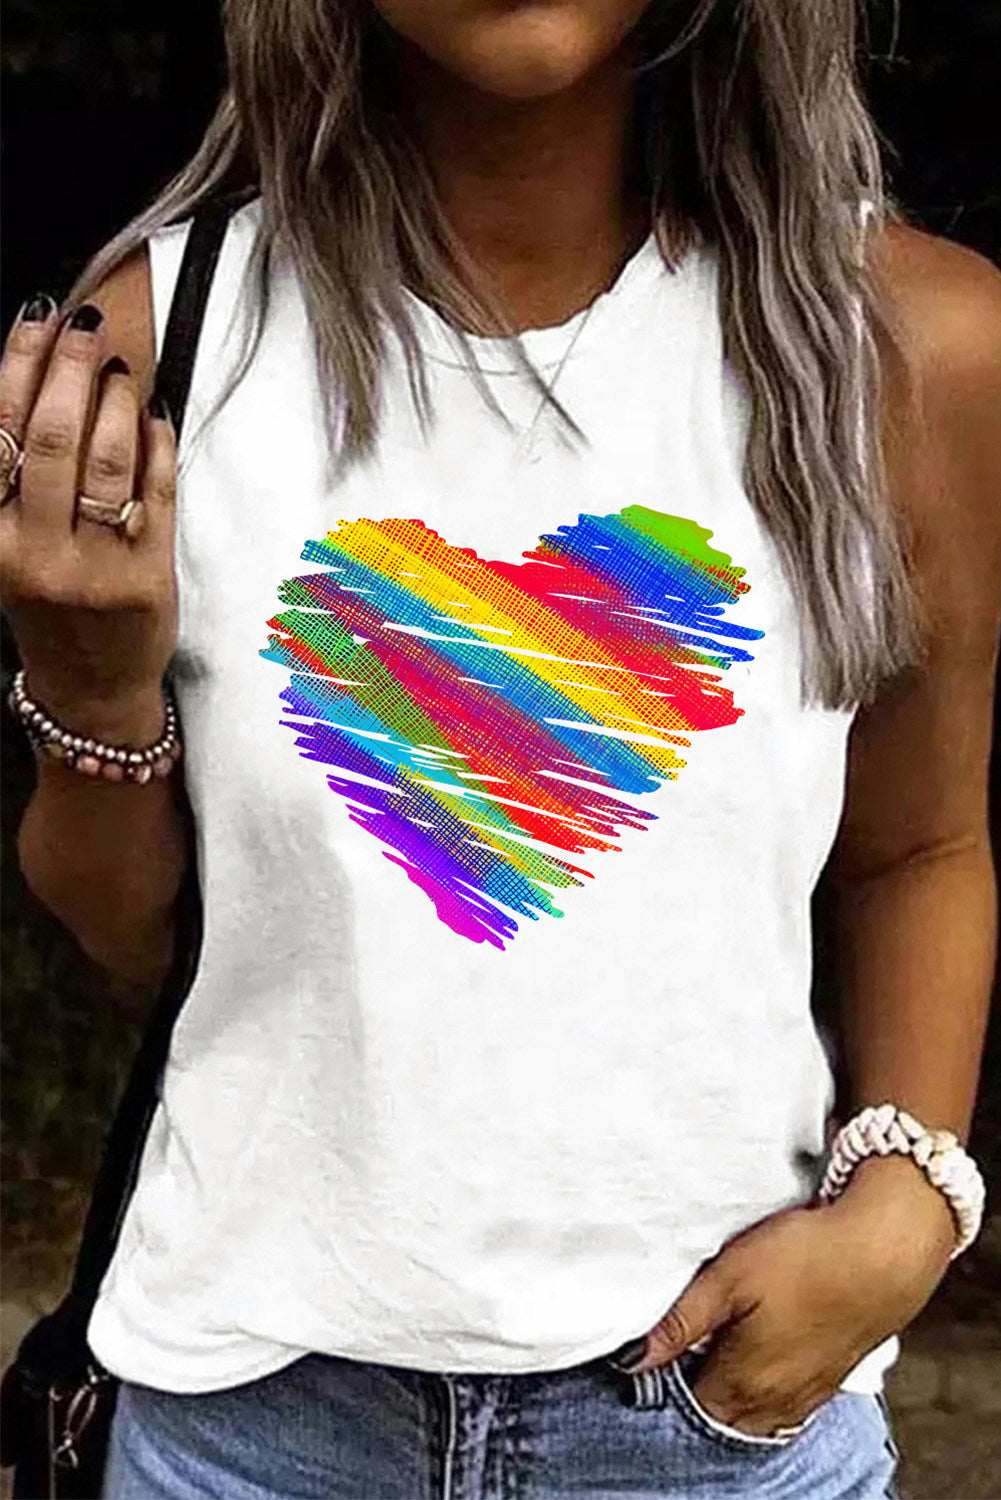 LC2569550-1-S, LC2569550-1-M, LC2569550-1-L, LC2569550-1-XL, LC2569550-1-2XL, White Womens Sleeveless Shirt Gay Pride Rainbow Heart Print Casual Tank Top